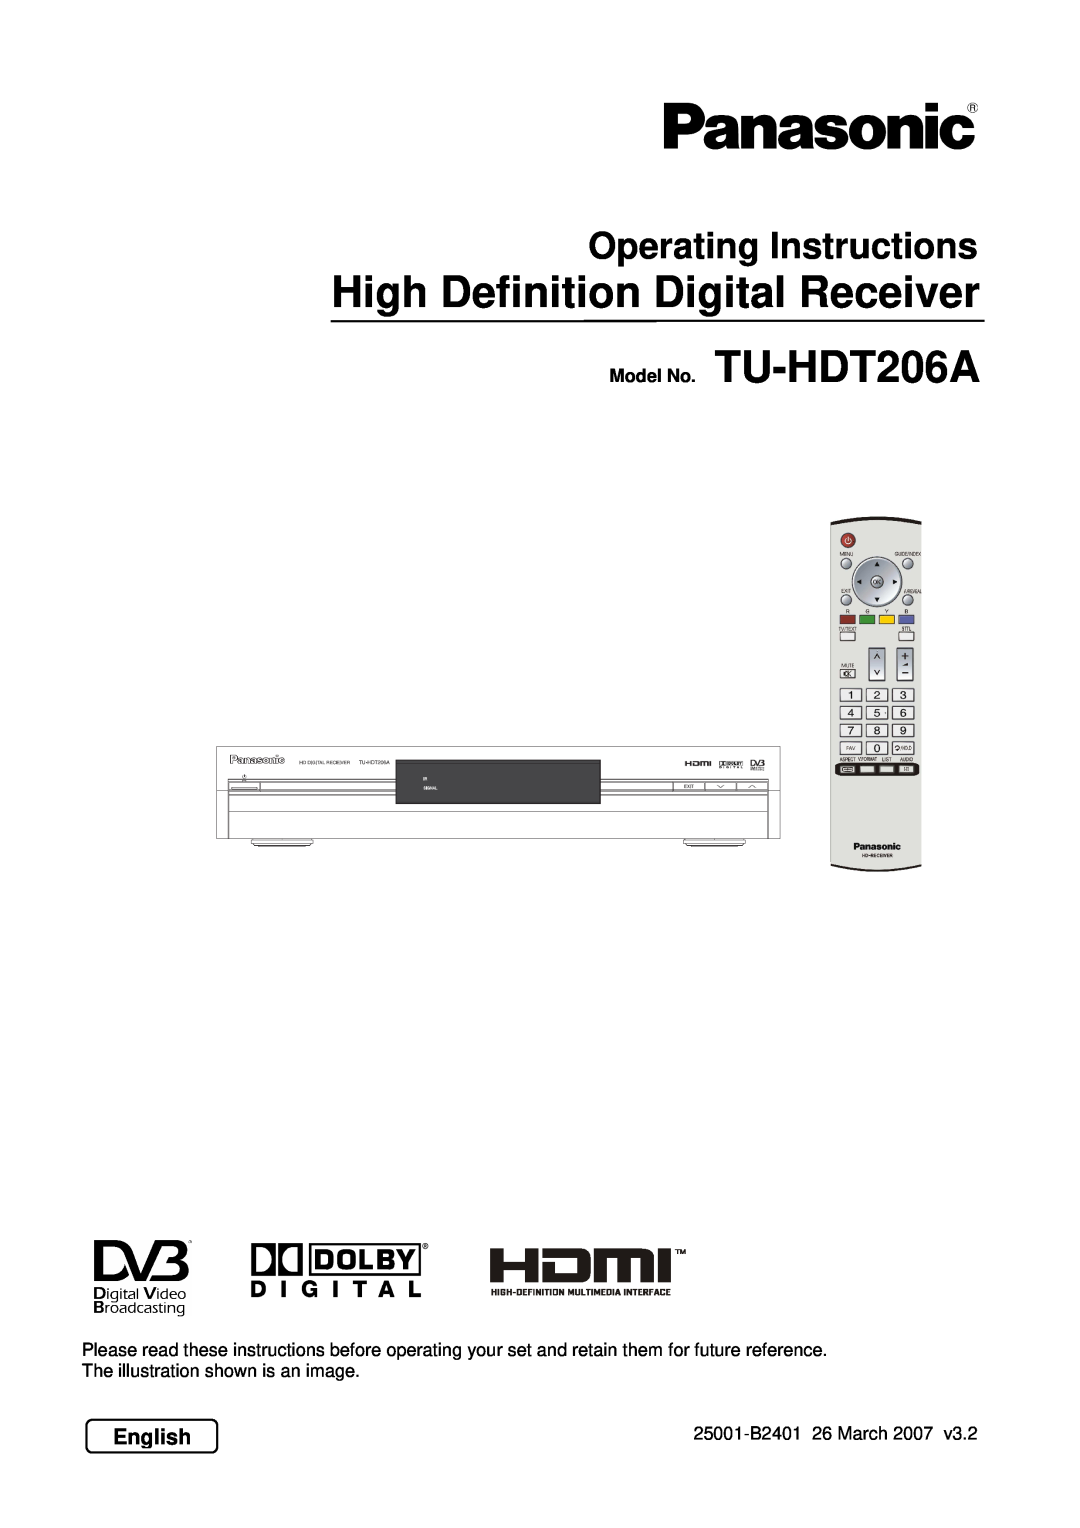 Panasonic manual High Definition Digital Receiver, Operating Instructions, English, Model No. TU-HDT206A 